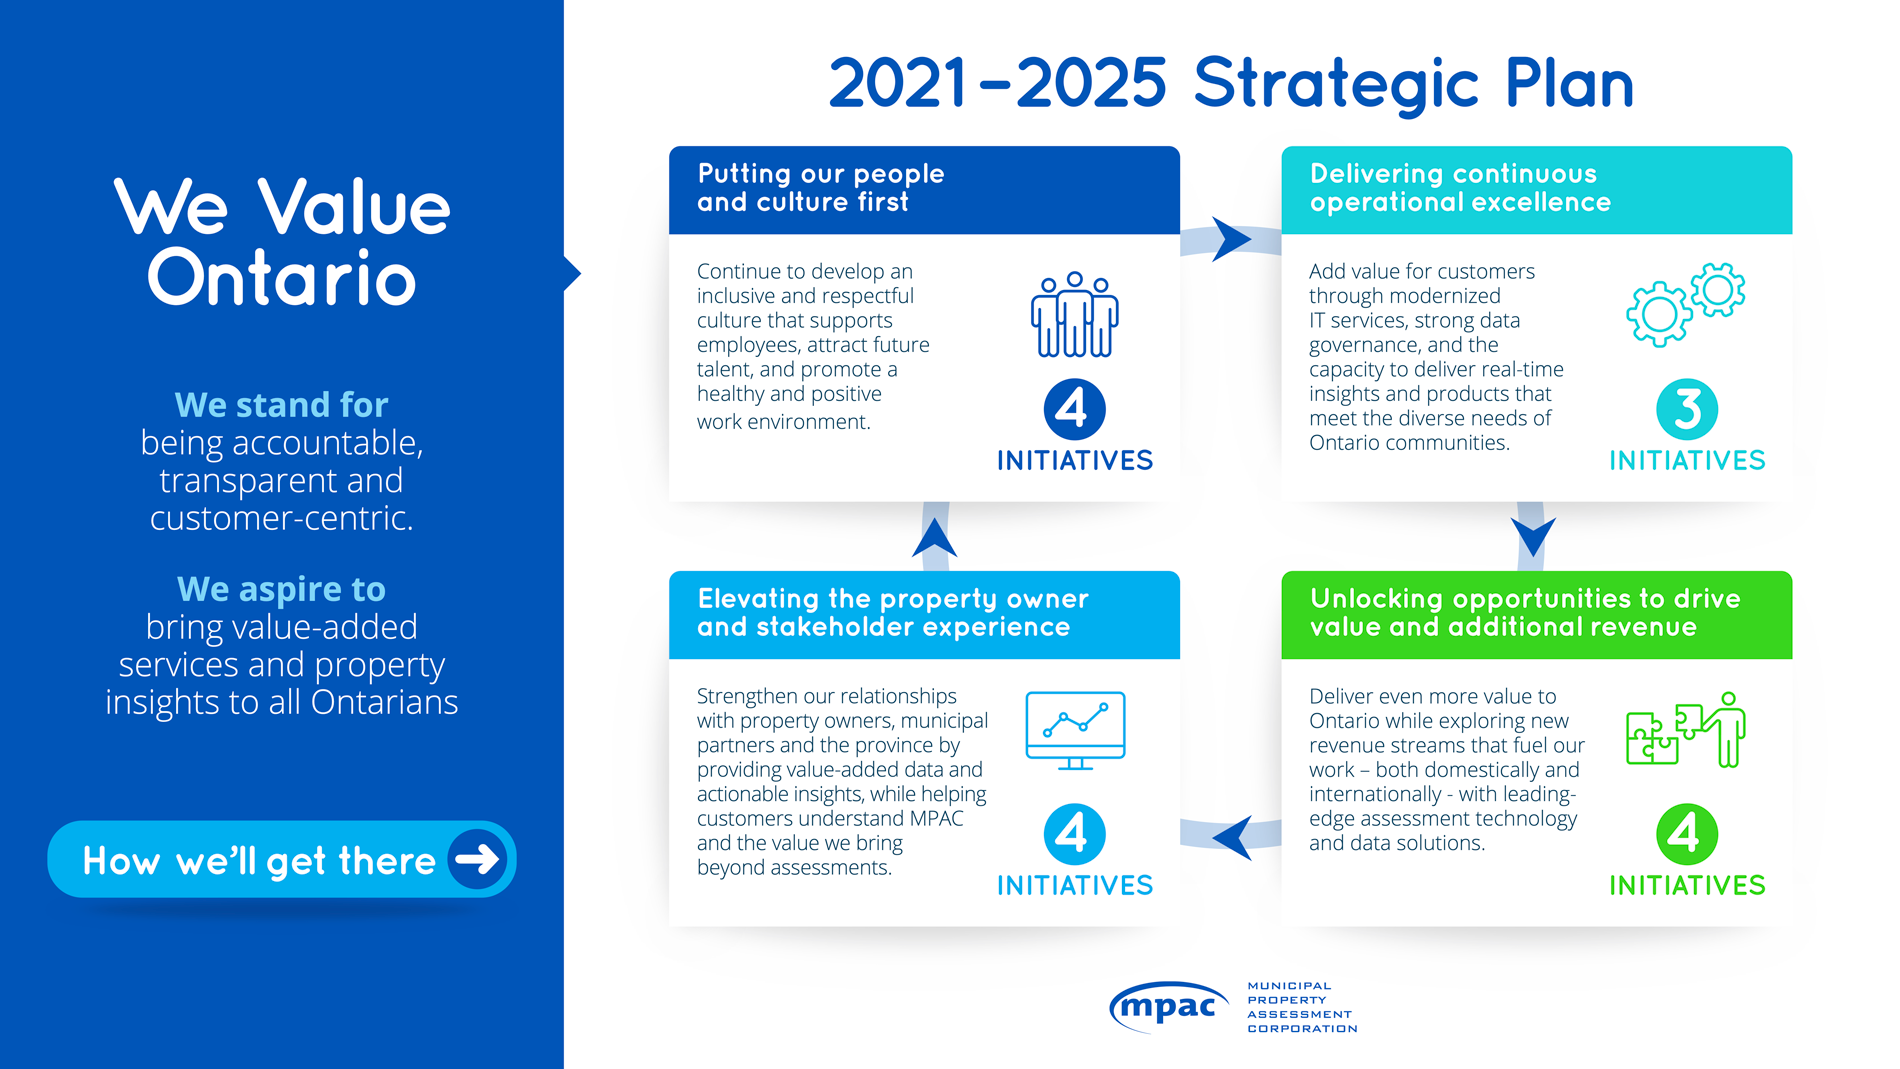 MPAC's 2021-2025 Strategic Plan